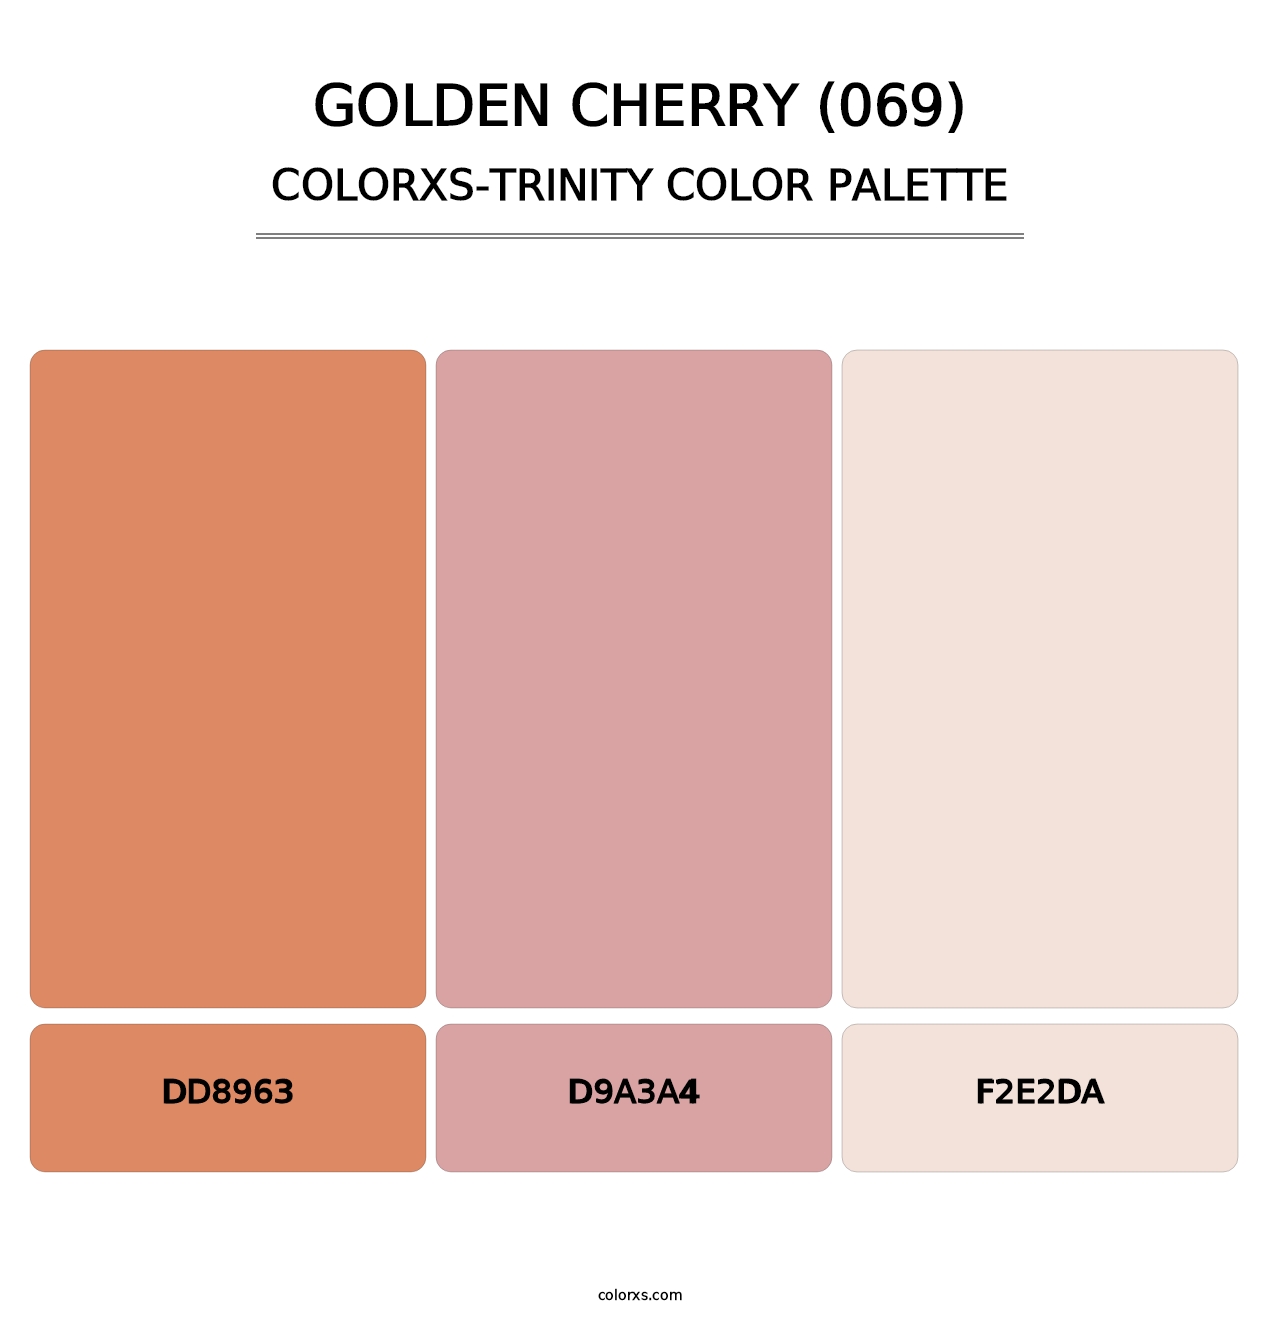 Golden Cherry (069) - Colorxs Trinity Palette